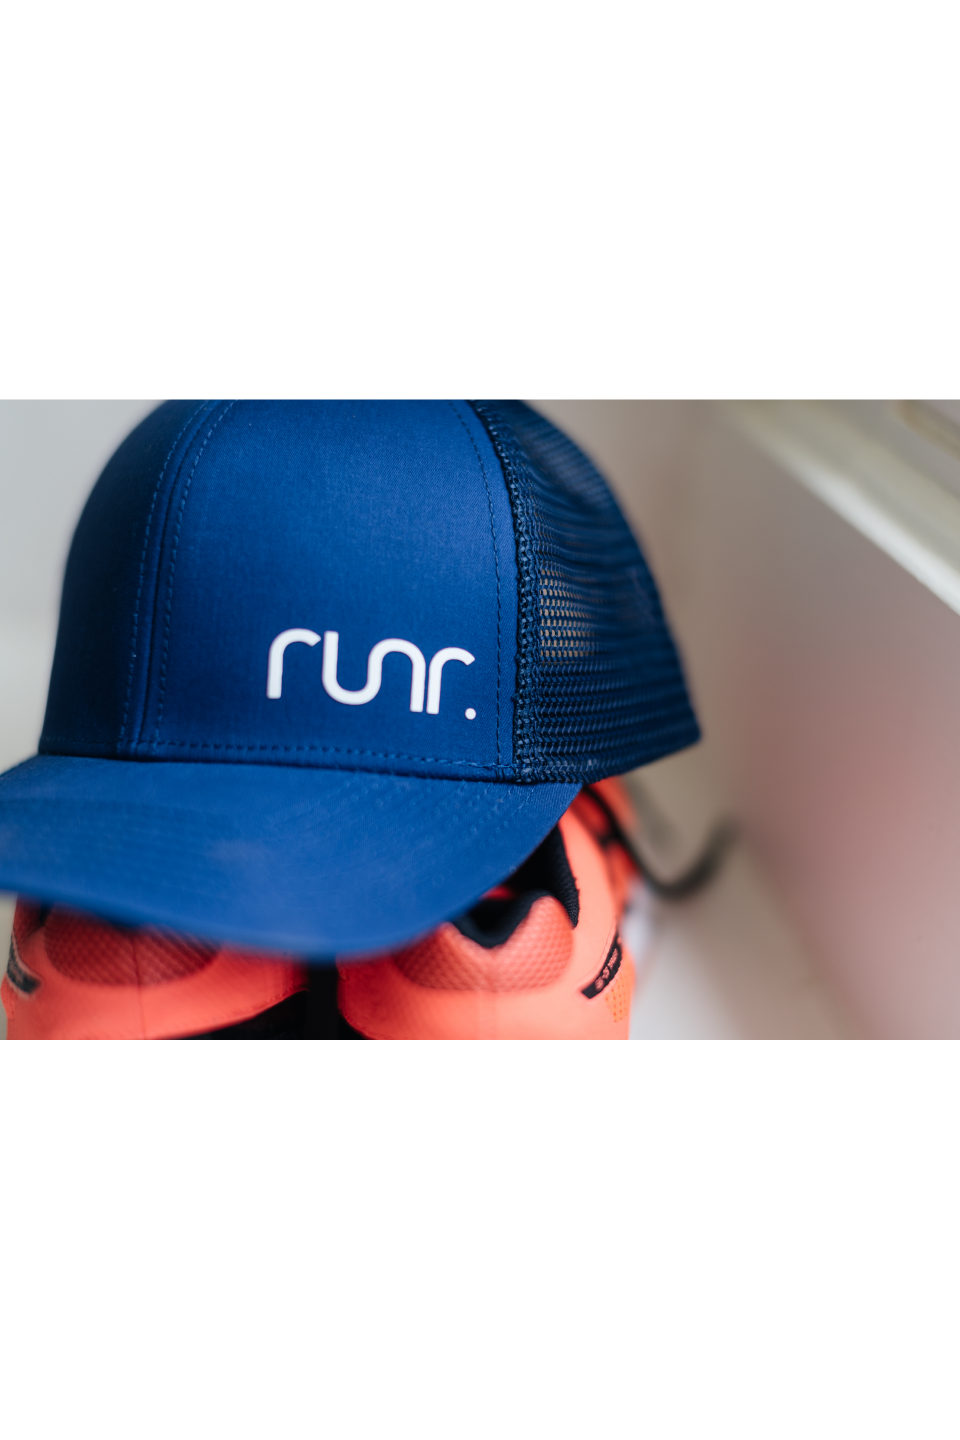 Runr Trucker Hat Bundle